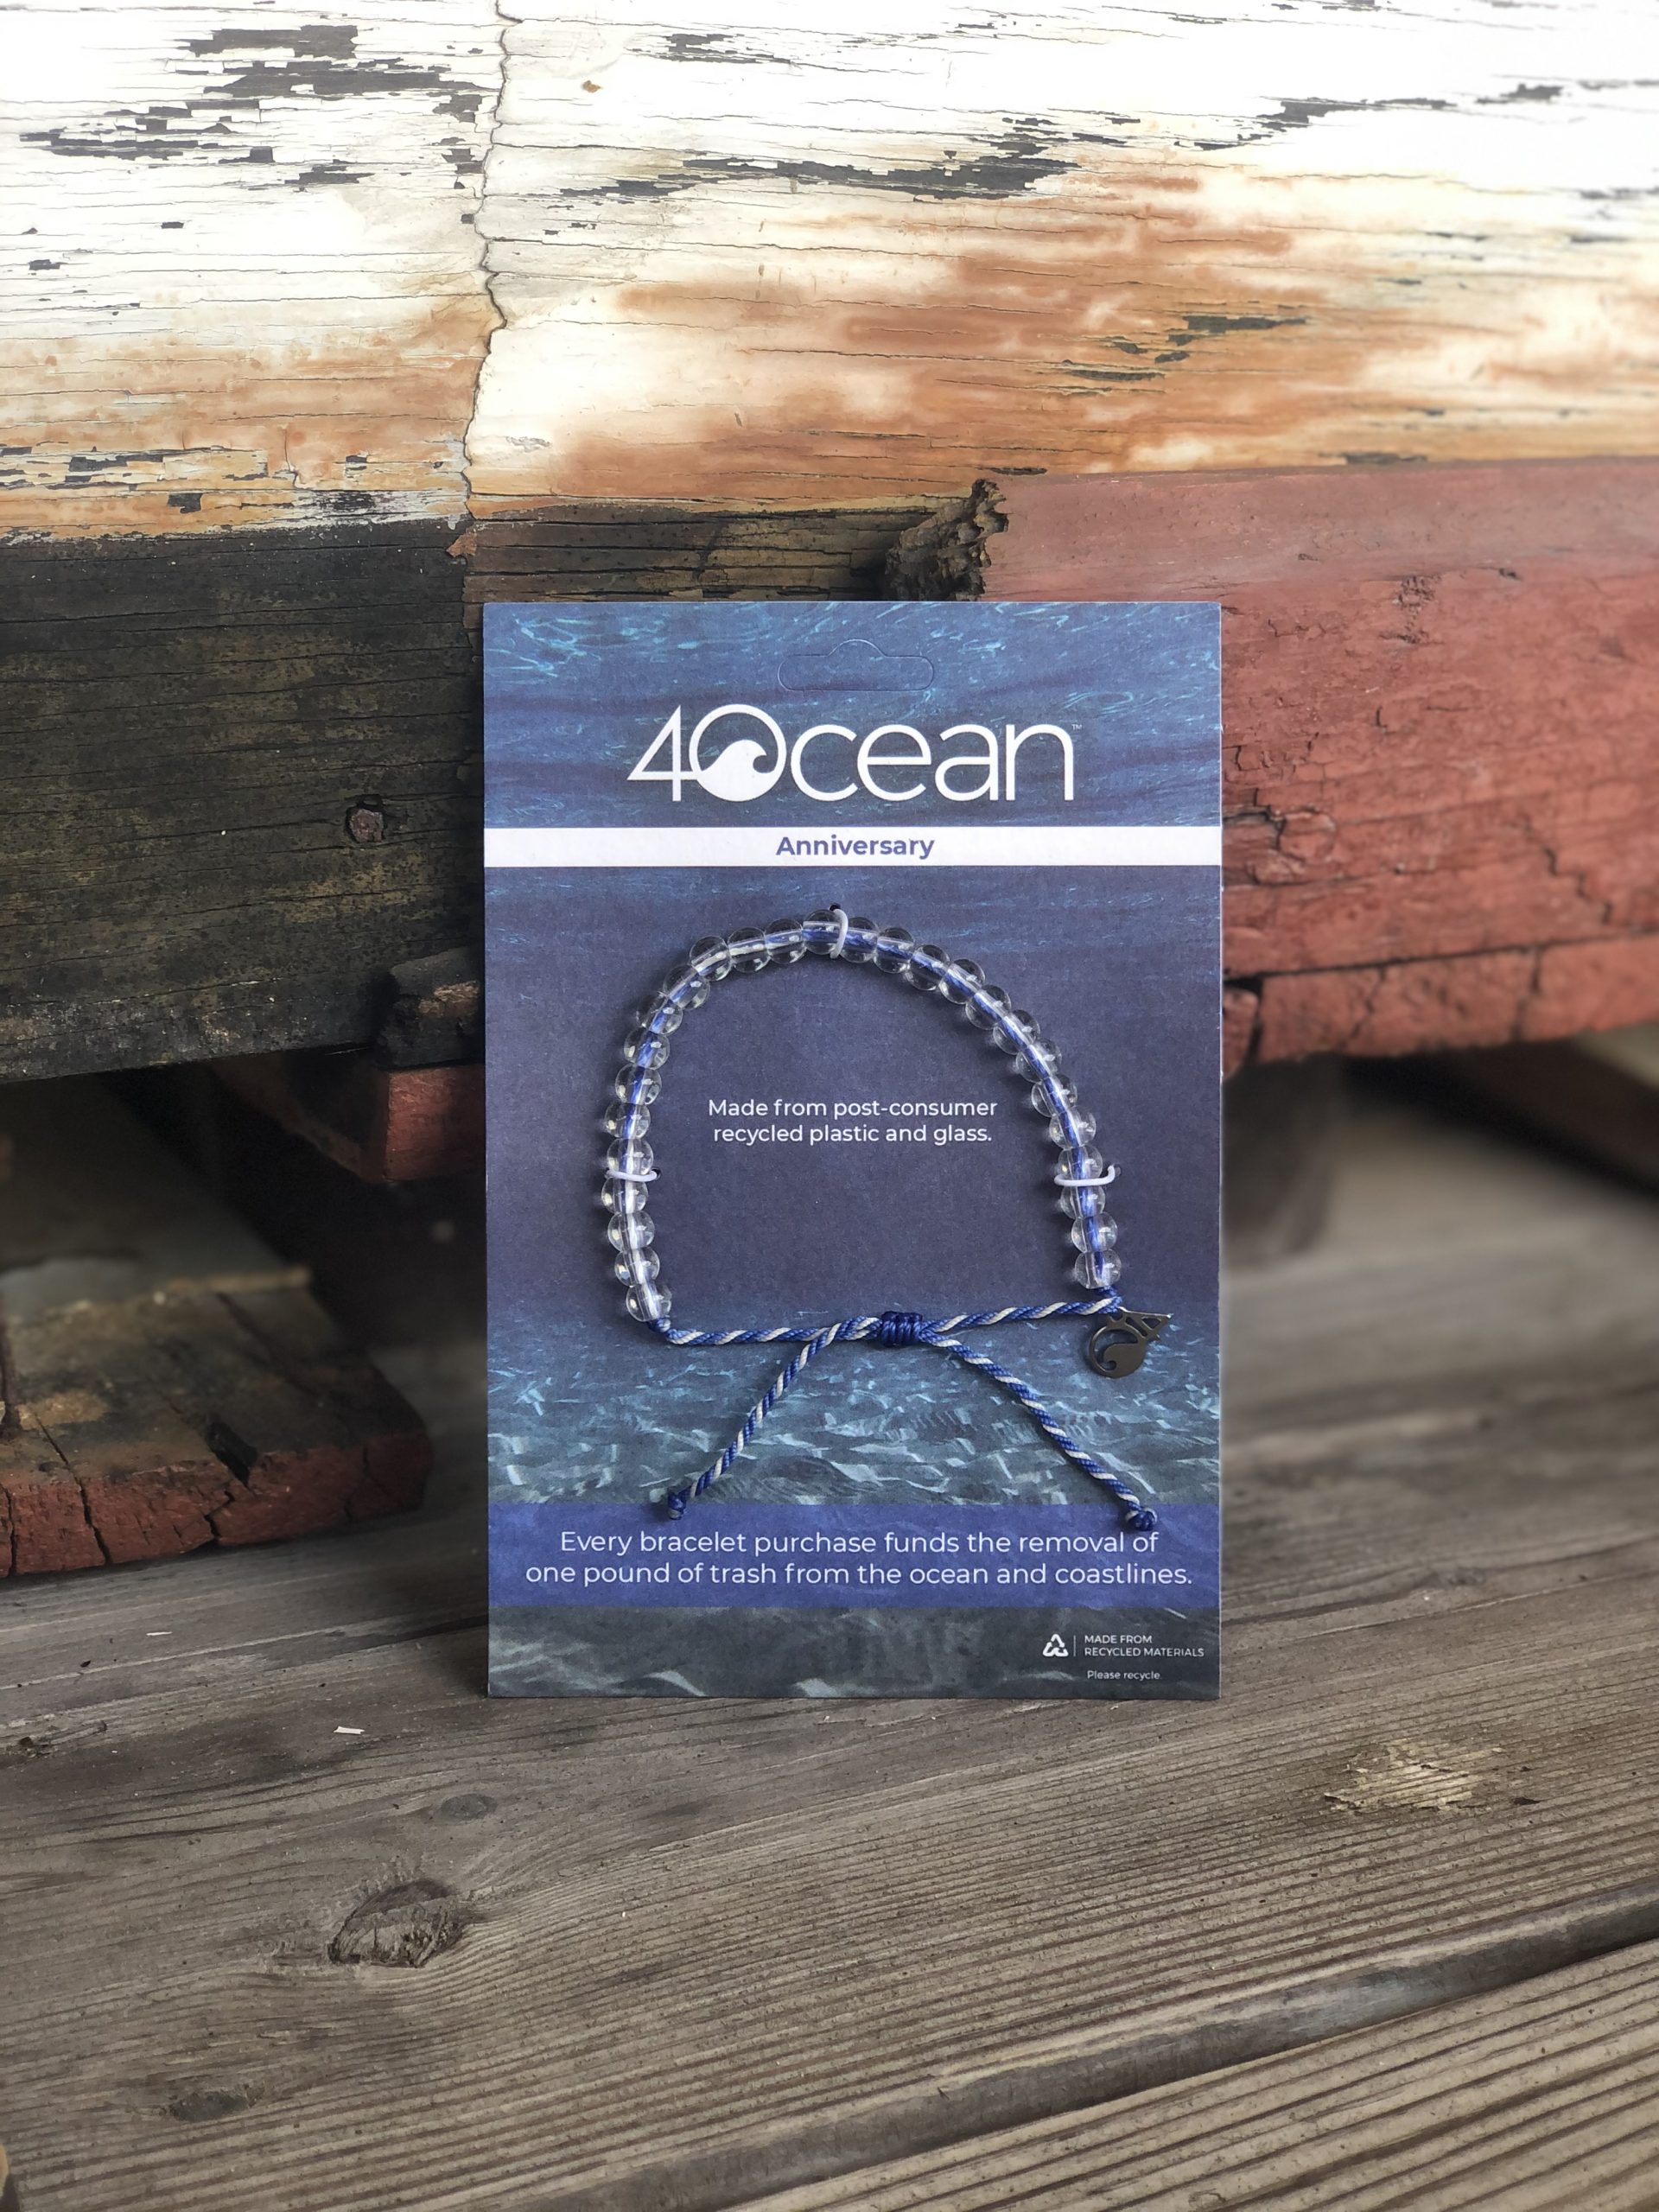 4ocean is Actively Combatting the Ocean Plastic Crisis